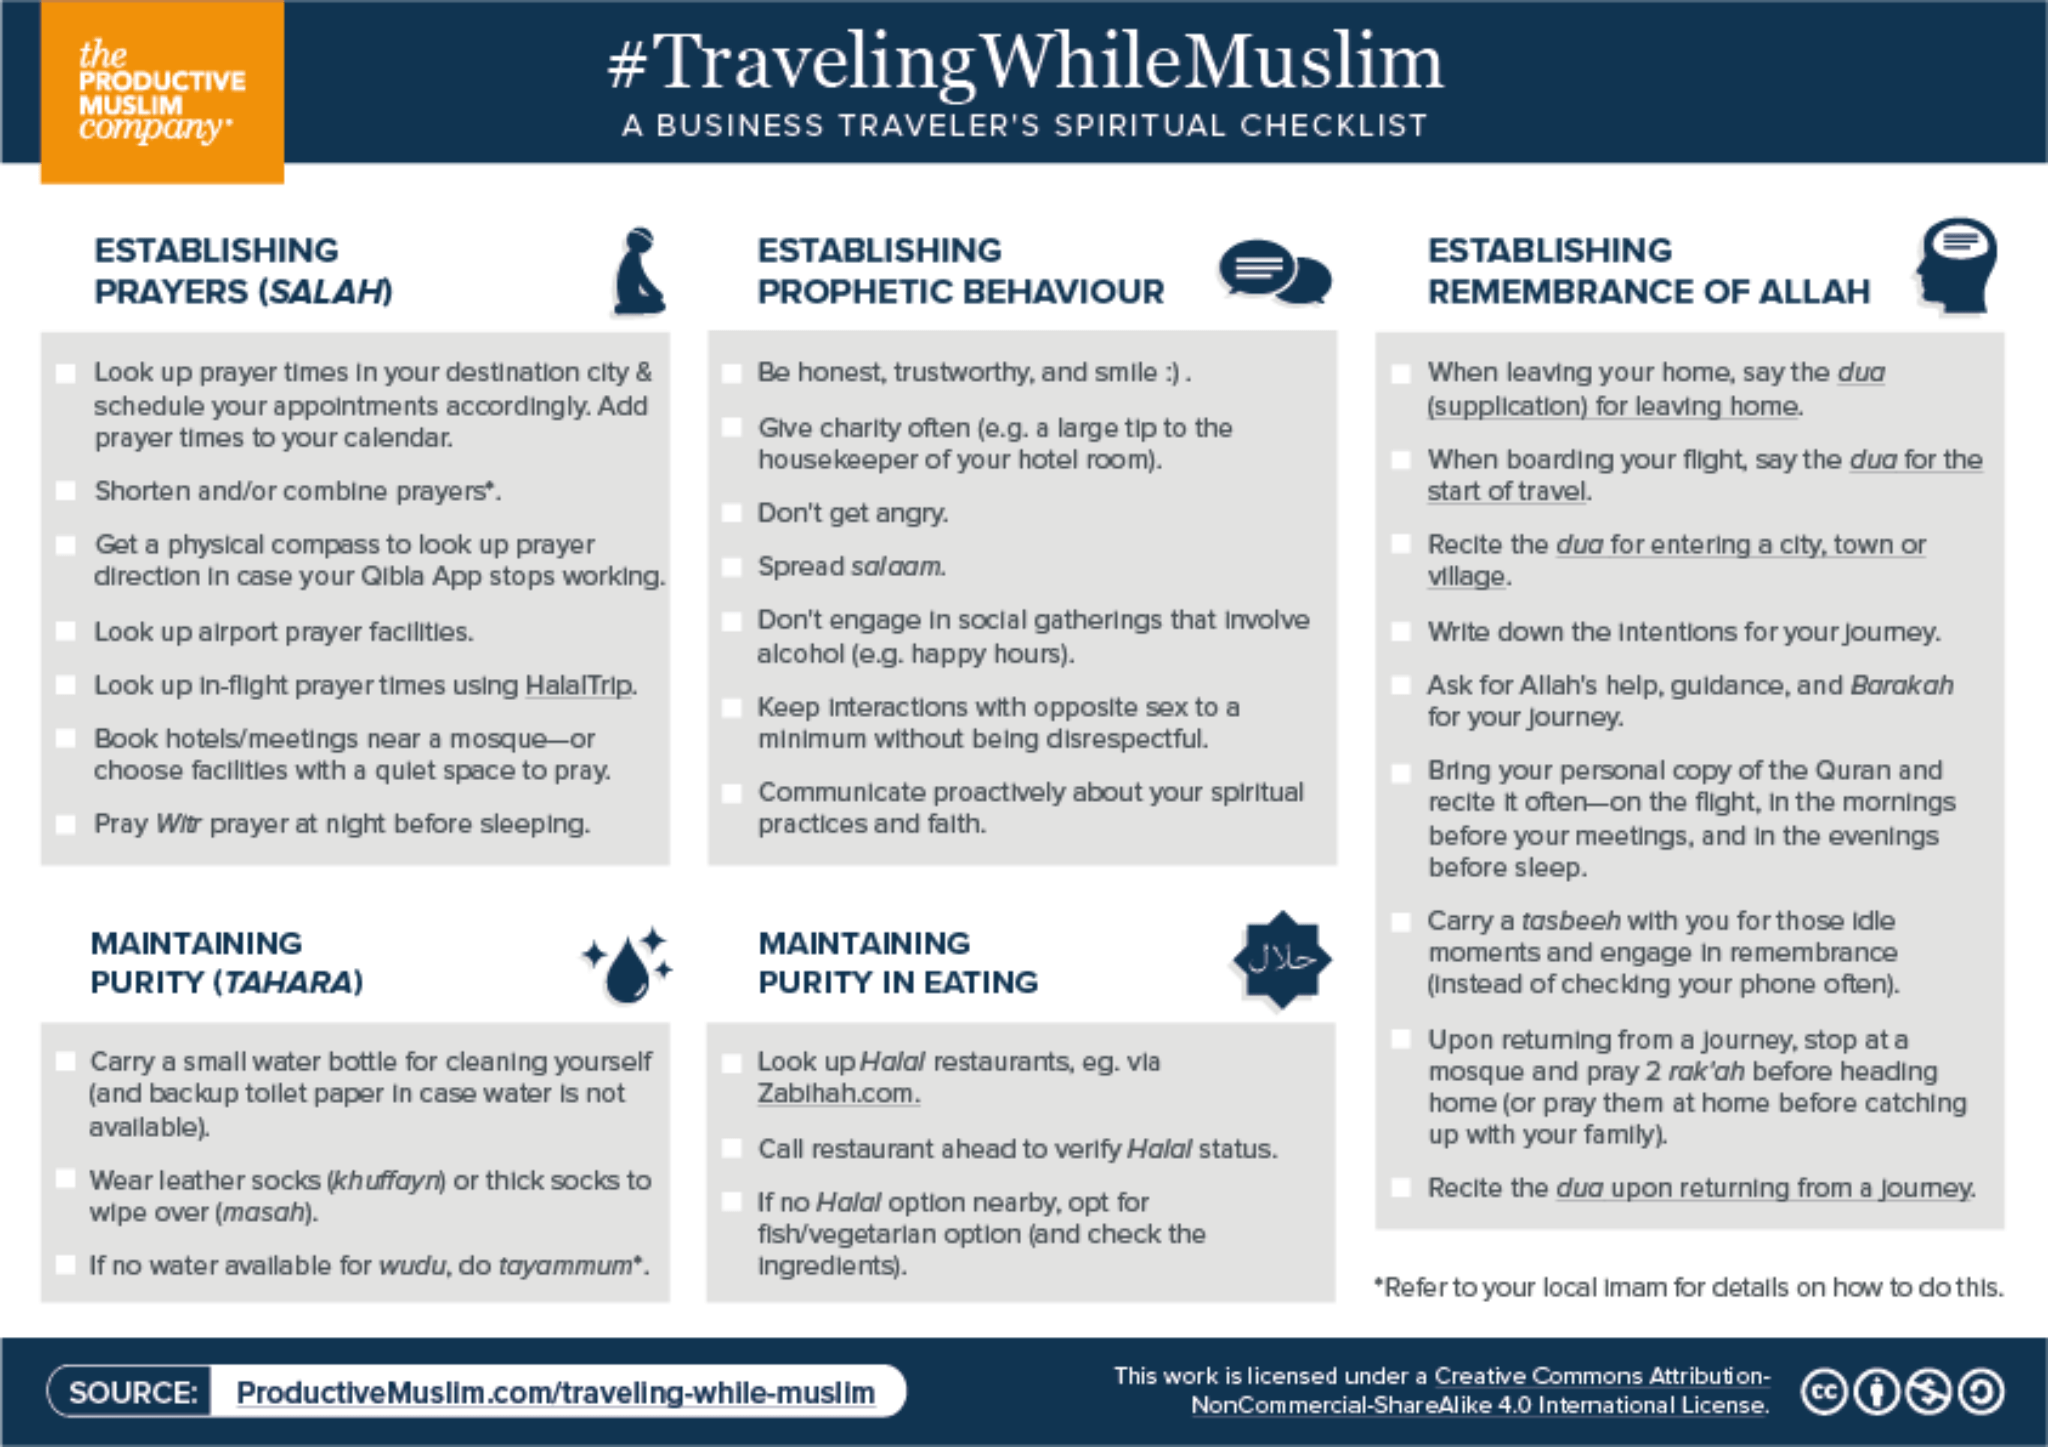 #TravelingWhileMuslim: A Practical Guide for Muslim Business Travelers